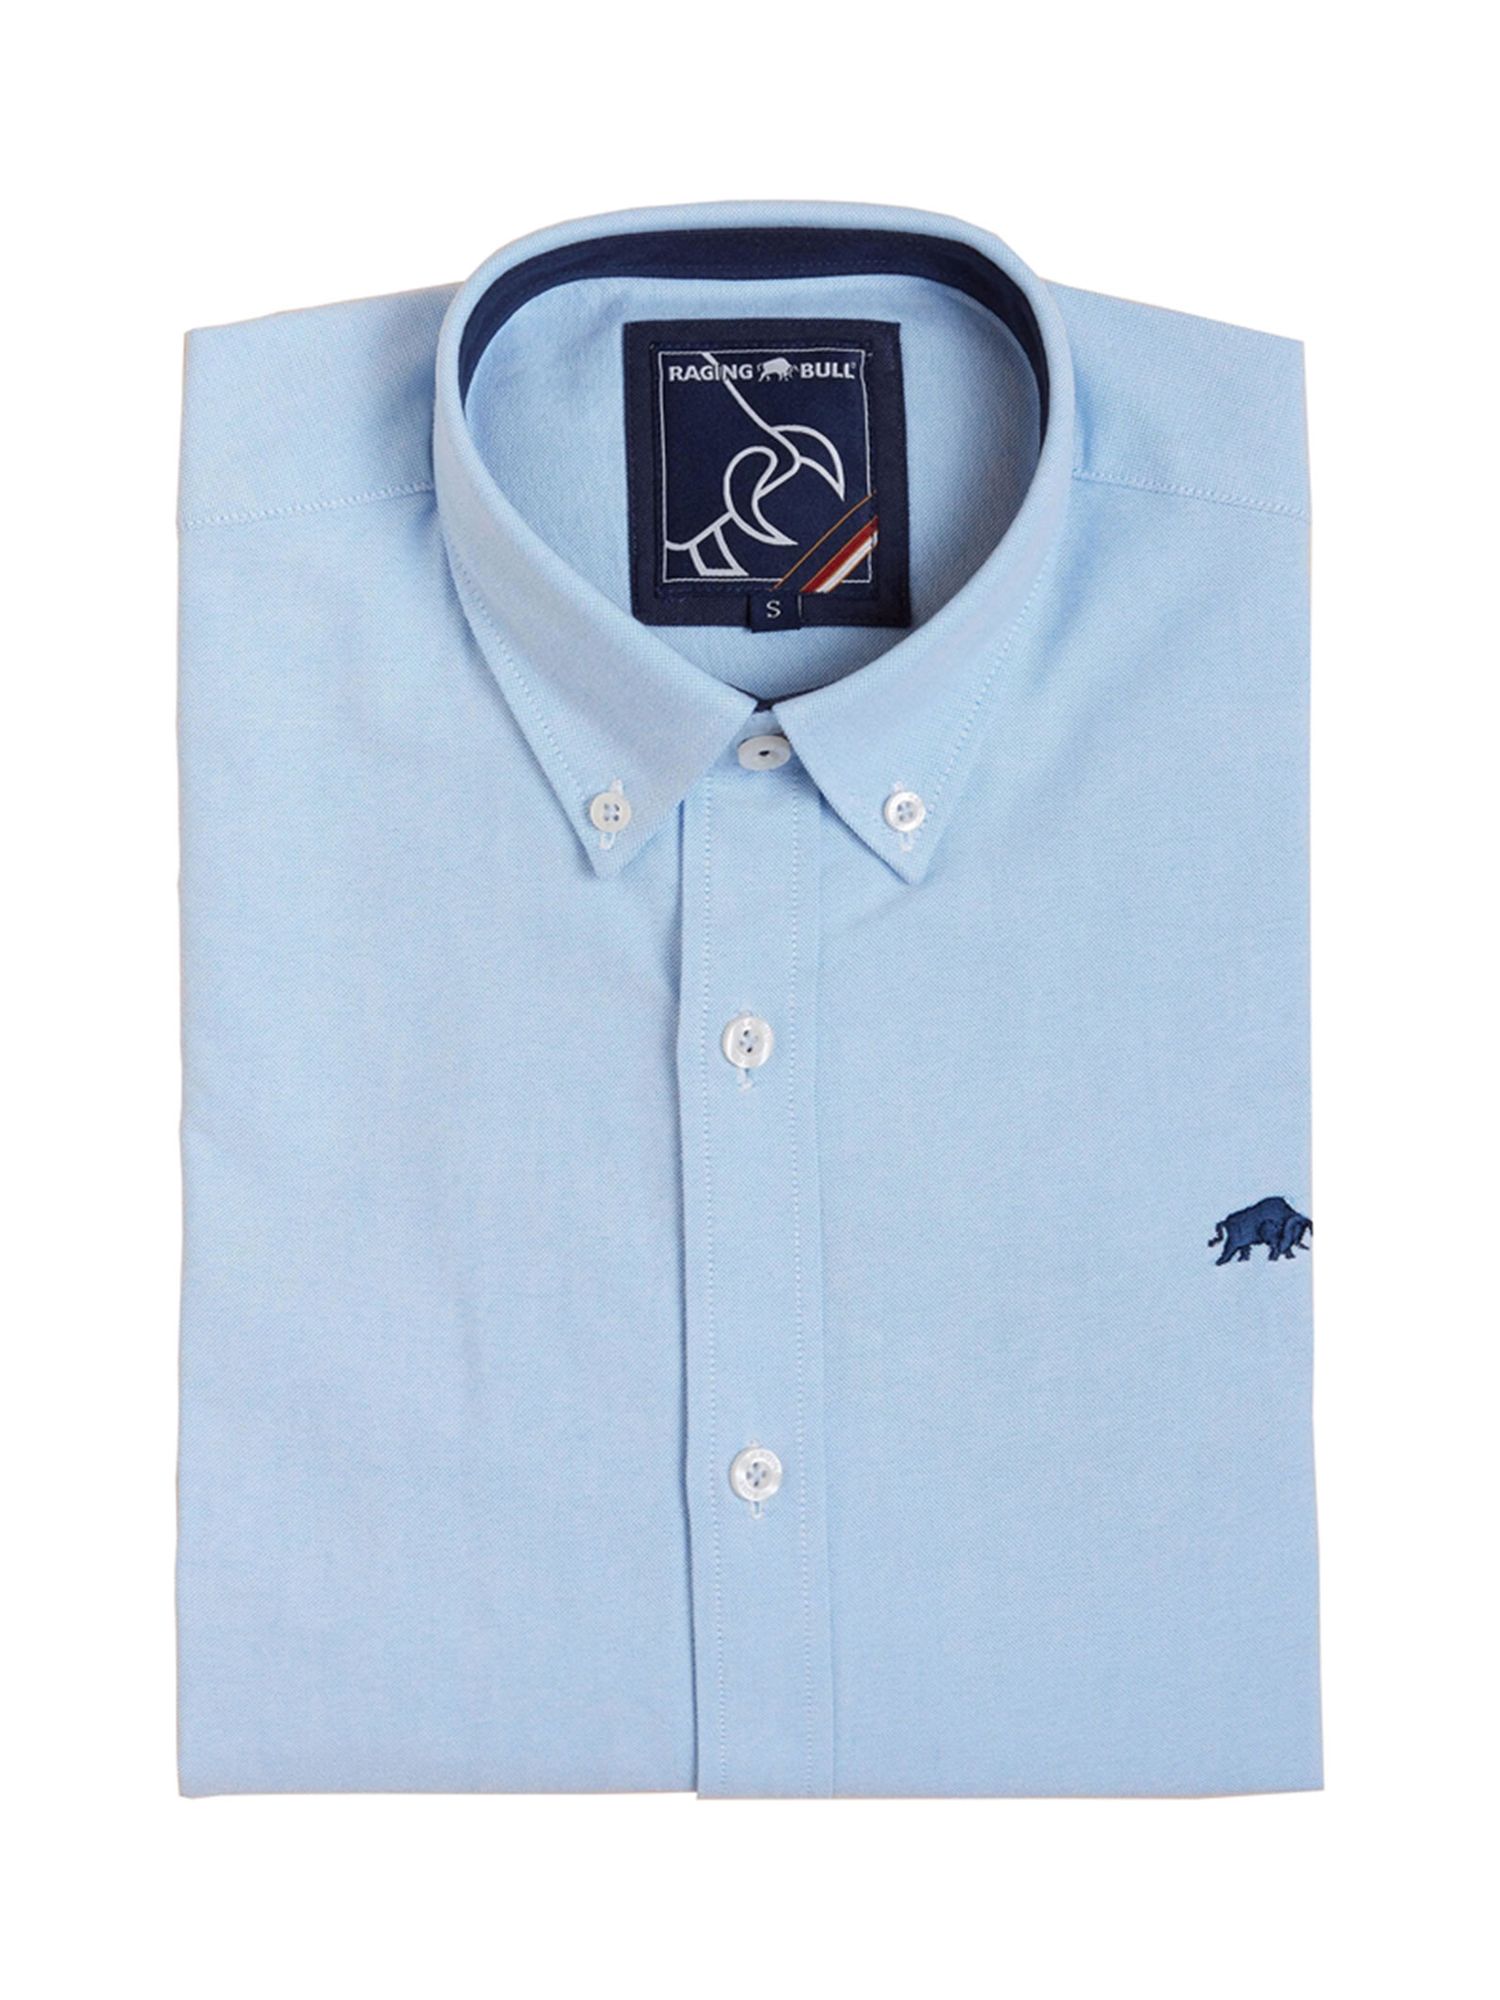 Raging Bull Classic Oxford Shirt, Sky Blue, S